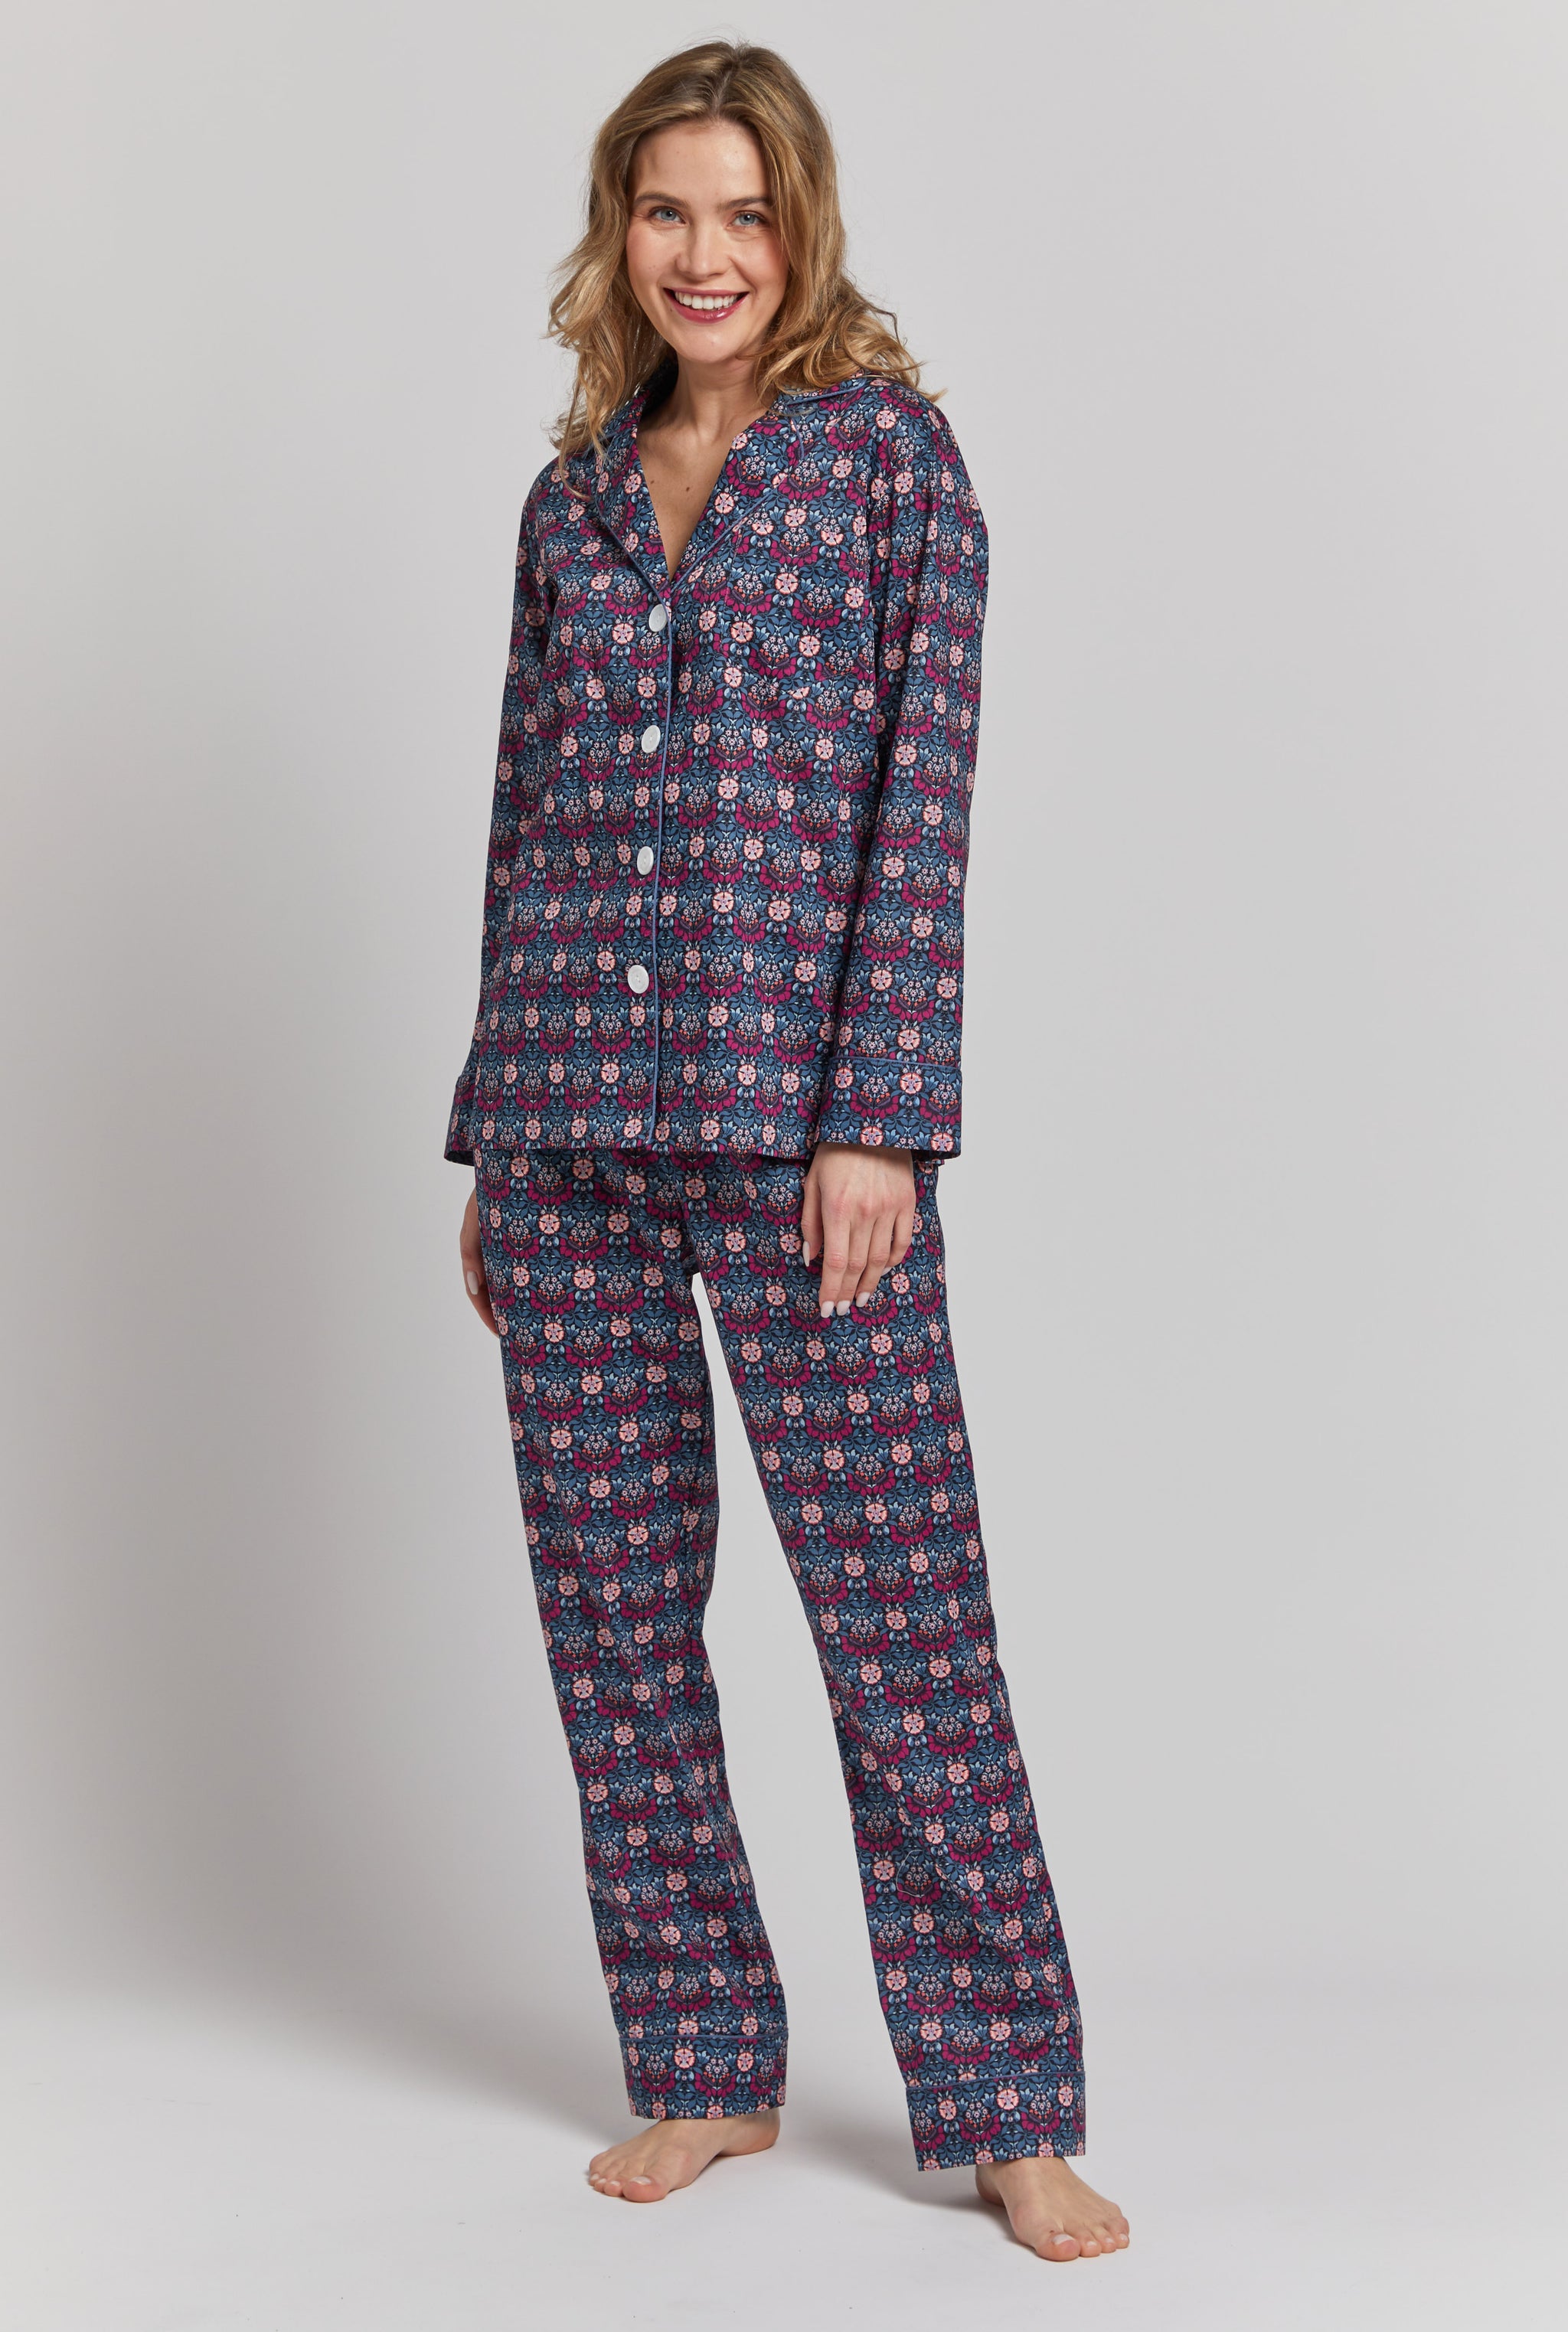 Liberty of London Cotton Pajamas for Women